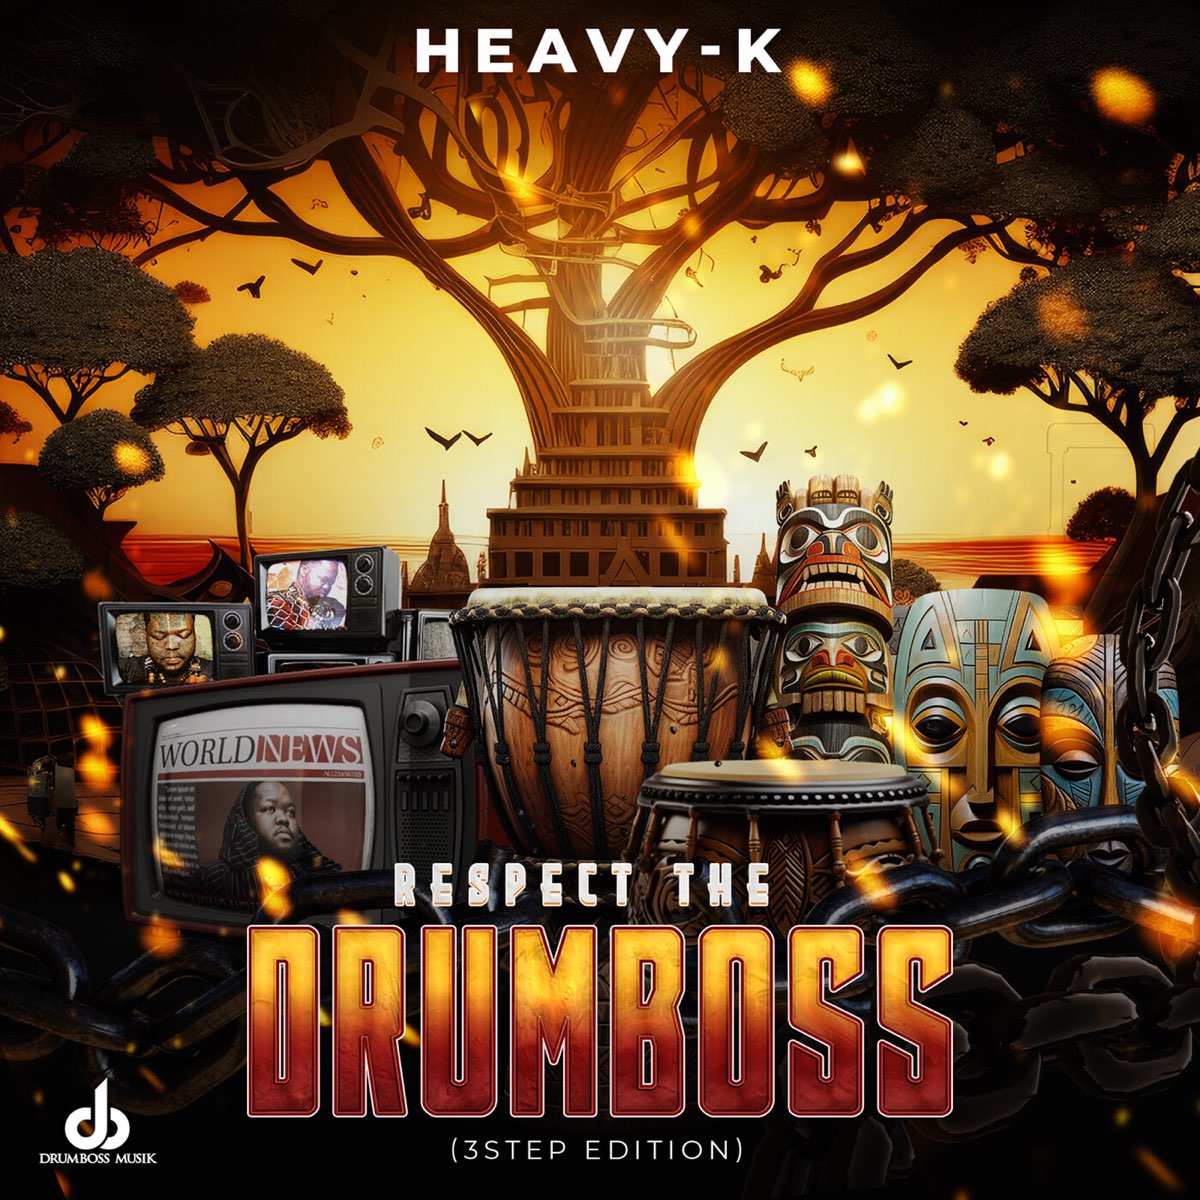 Heavy K – Respect The Drumboss (3 Step Edition) Album 1